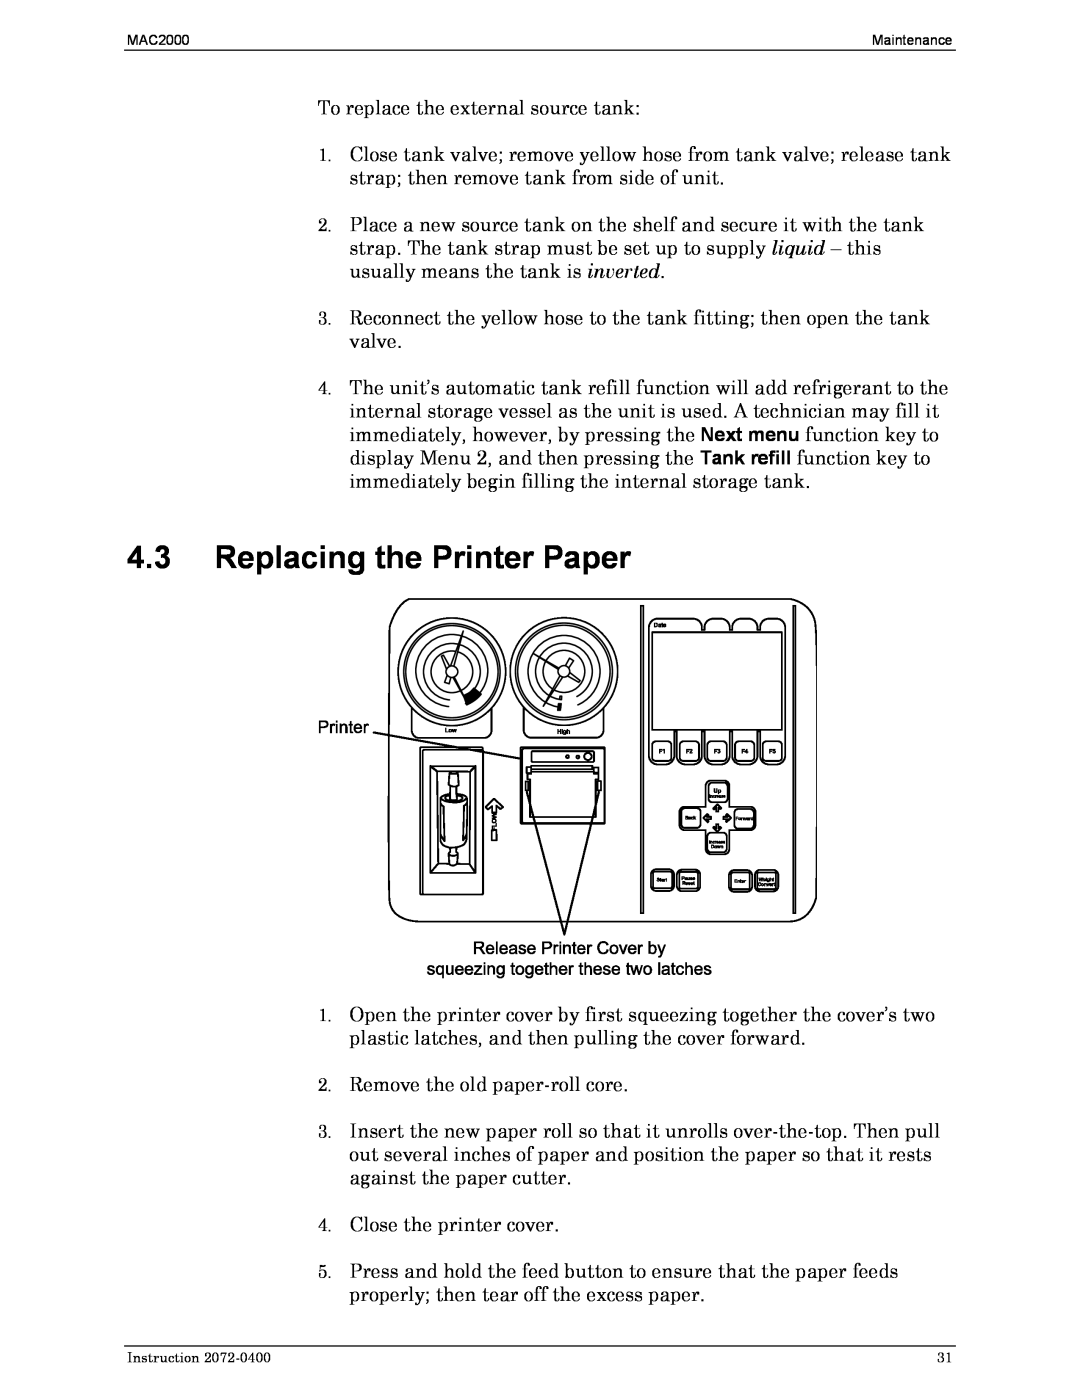 Bacharach 2072-0400 manual 4.3Replacing the Printer Paper 